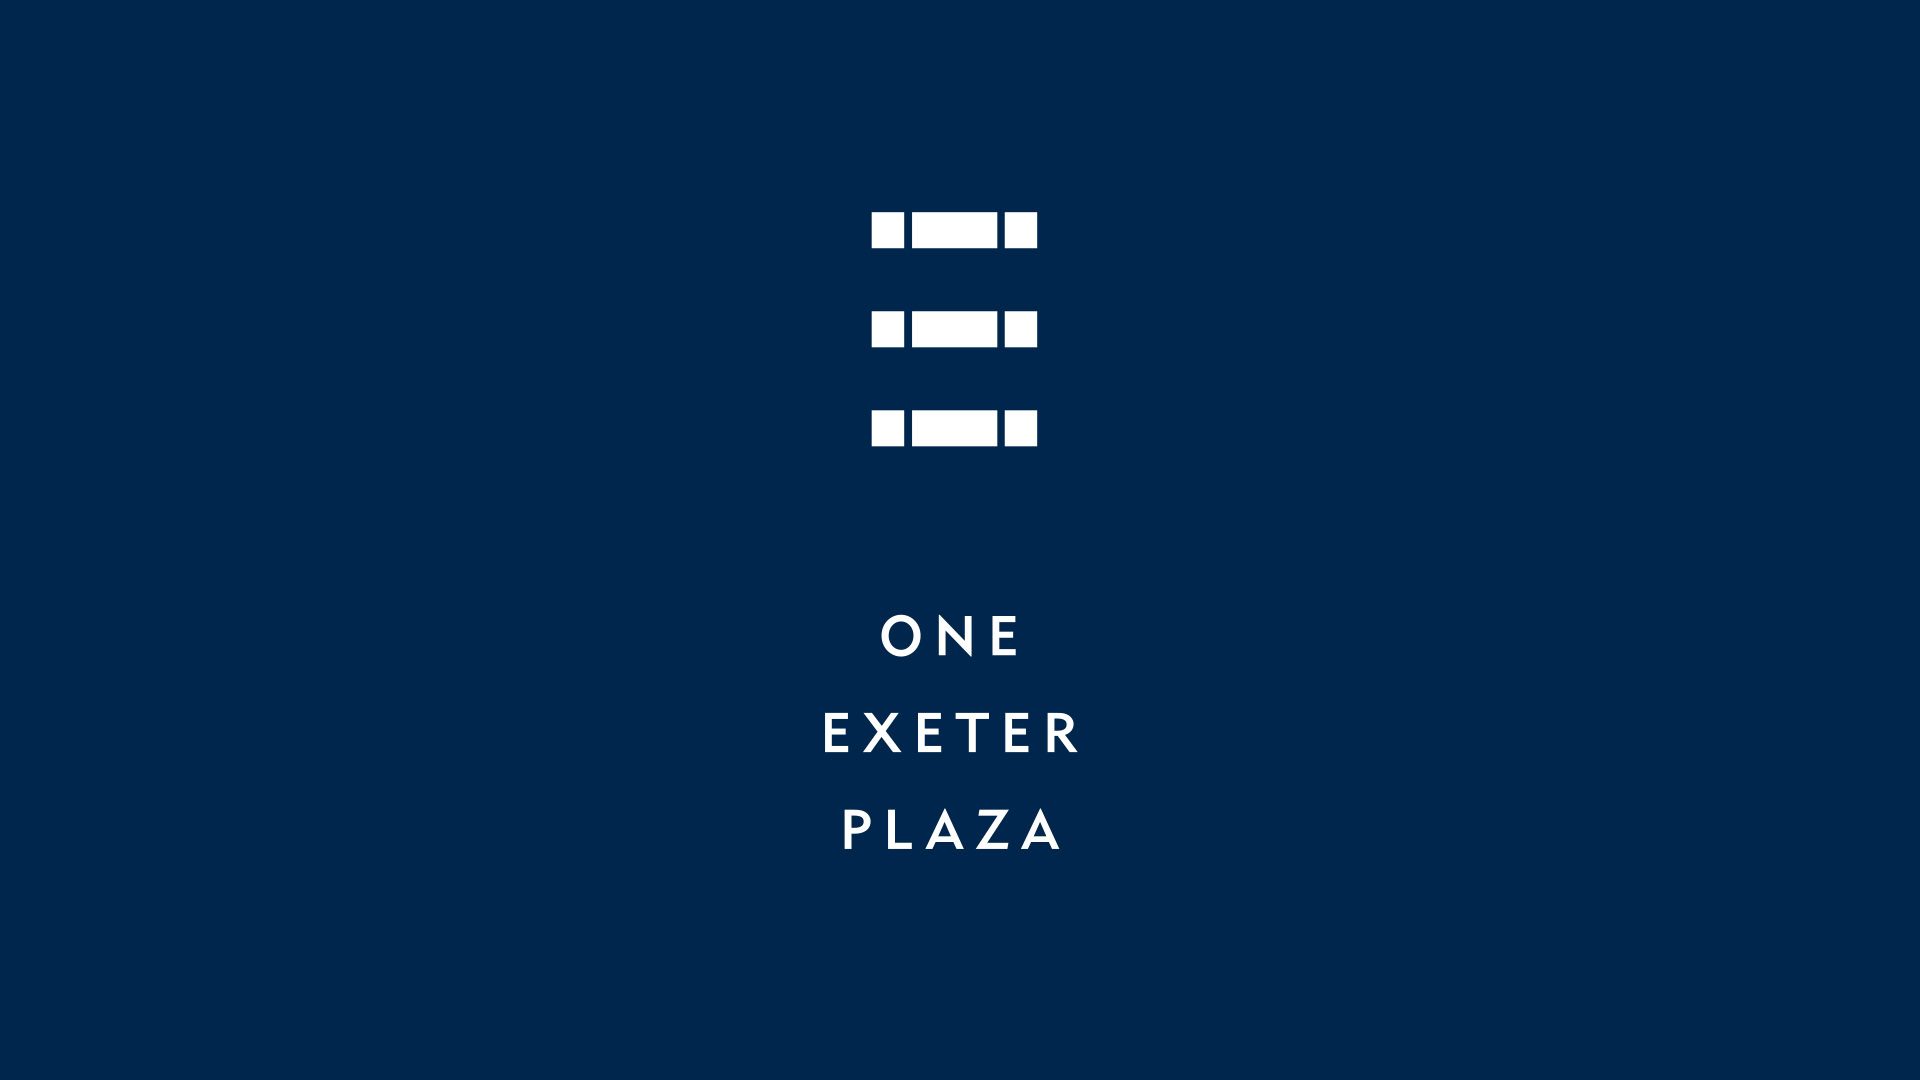 one exeter plaza on dark blue